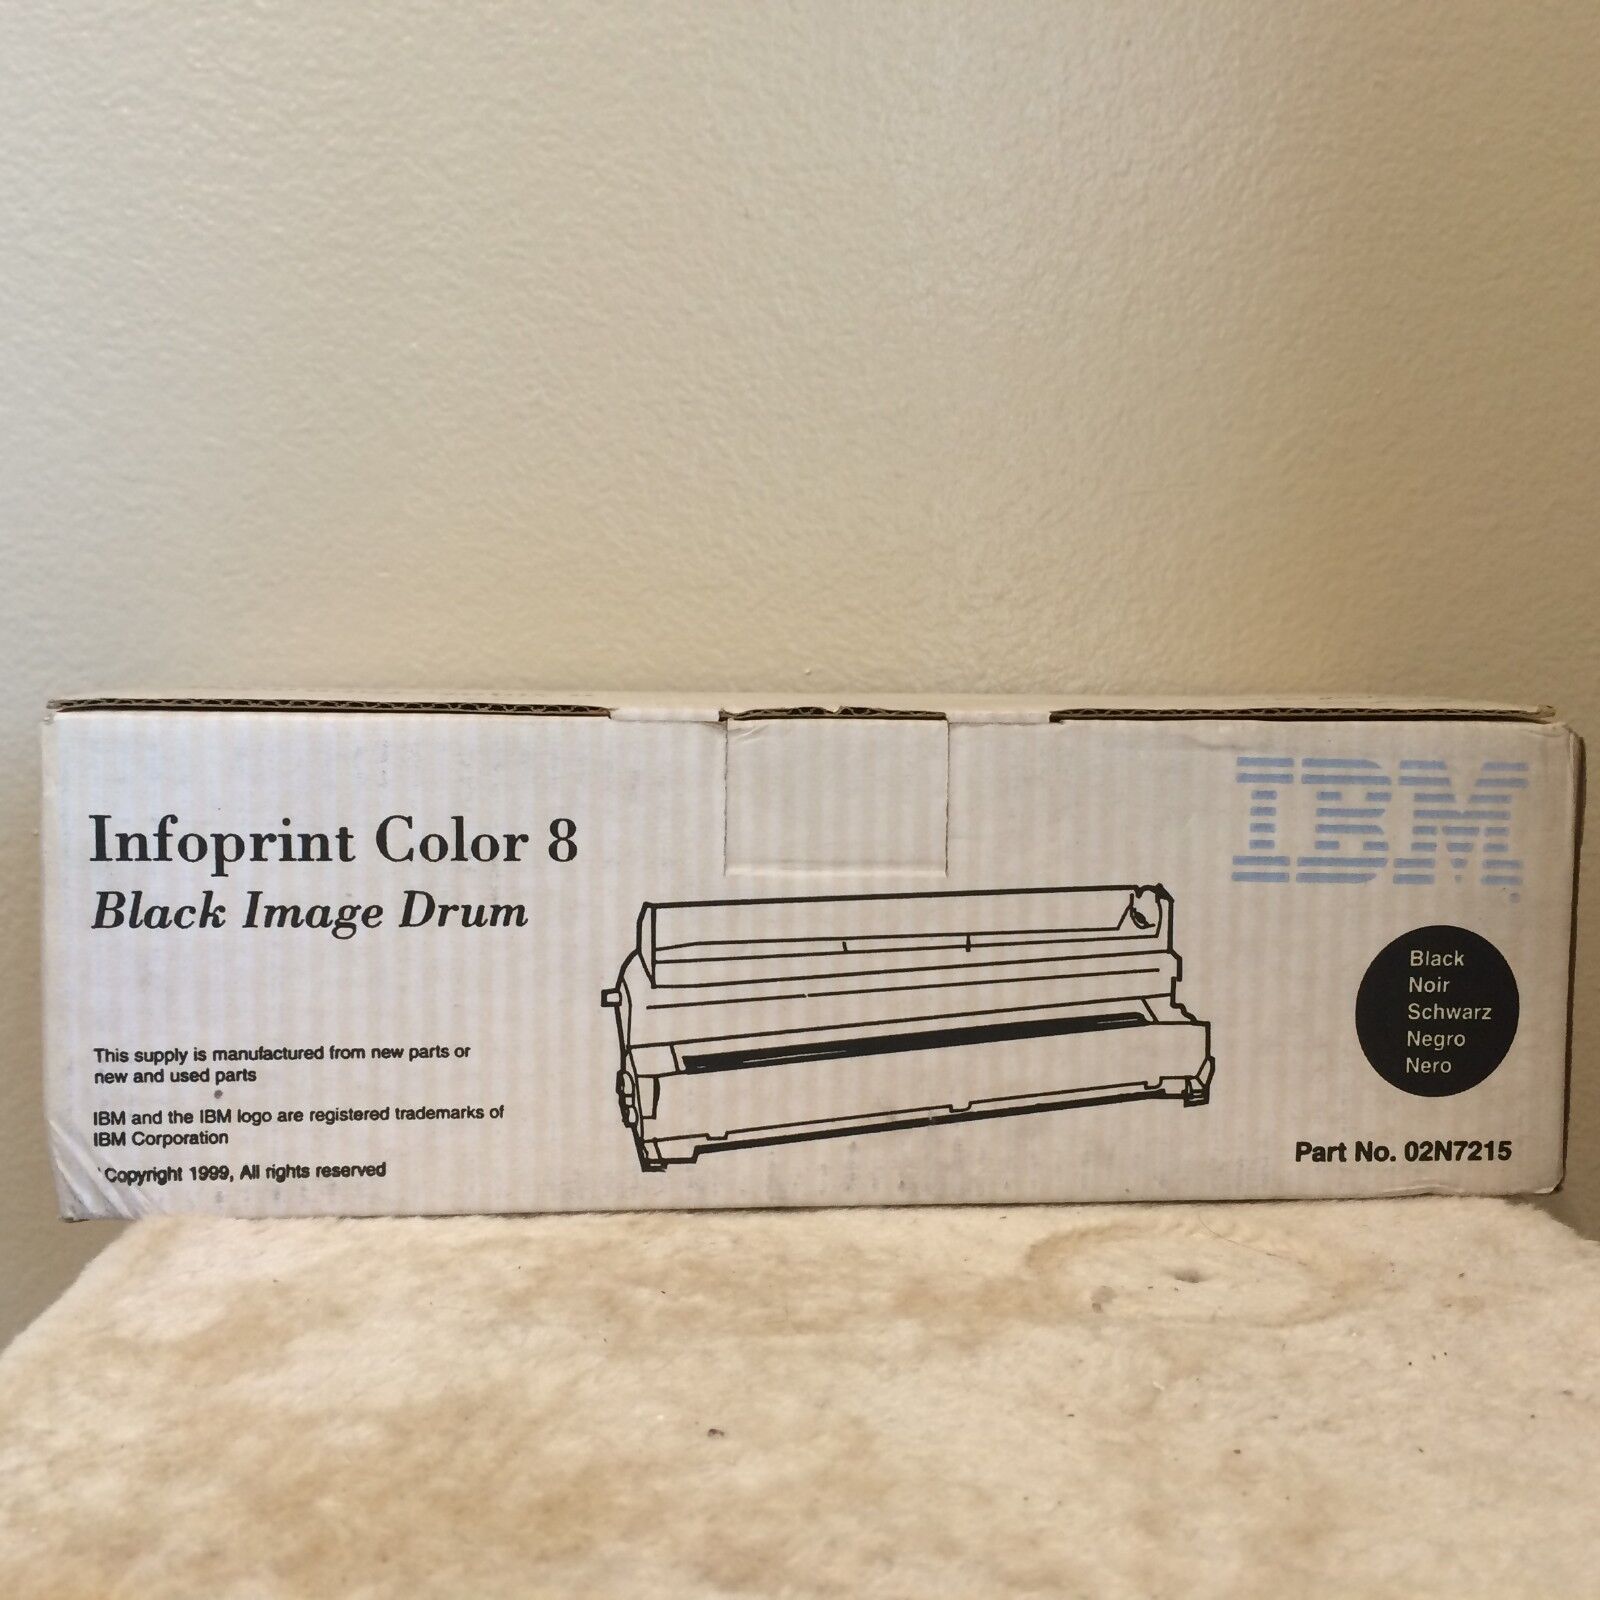 NEW  GENUINE IBM Infoprint Color 8 - Black Image Drum 02N7213 - Unopened Box 